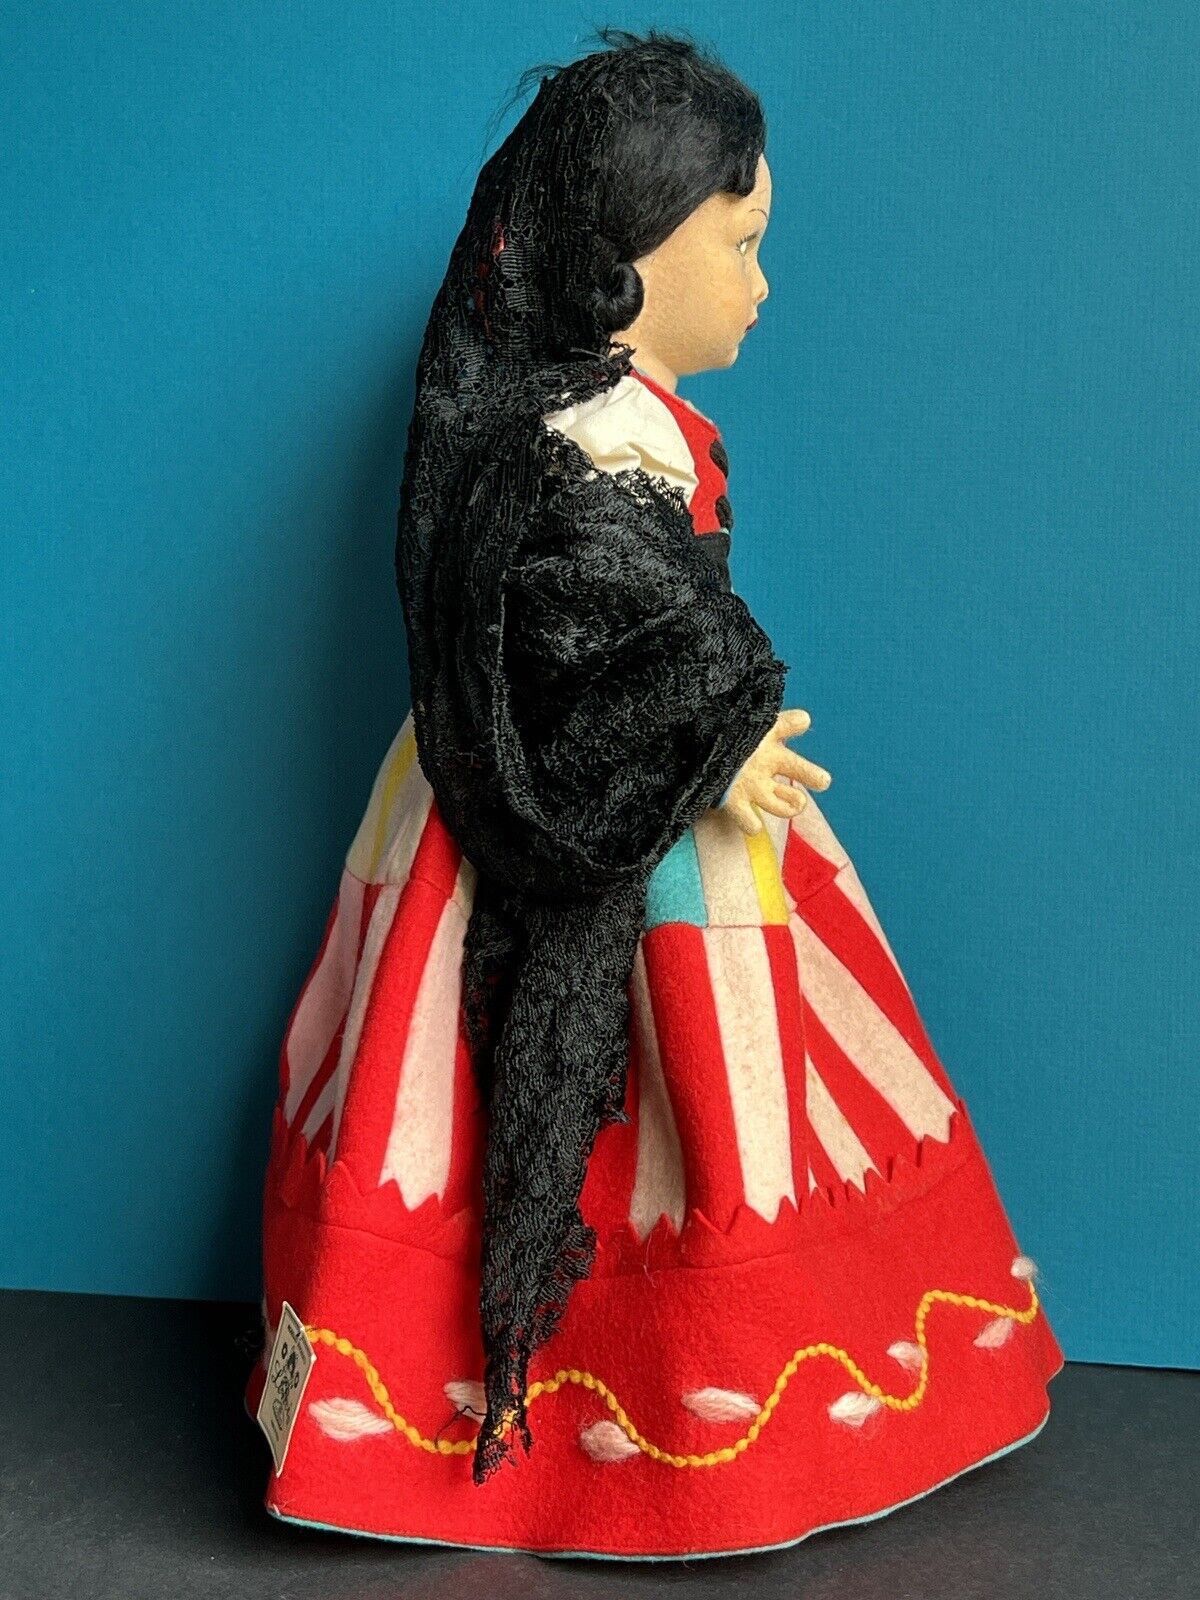 All Original Vintage Italian Lenci 14” Rita Lucia Felt Doll with Tag